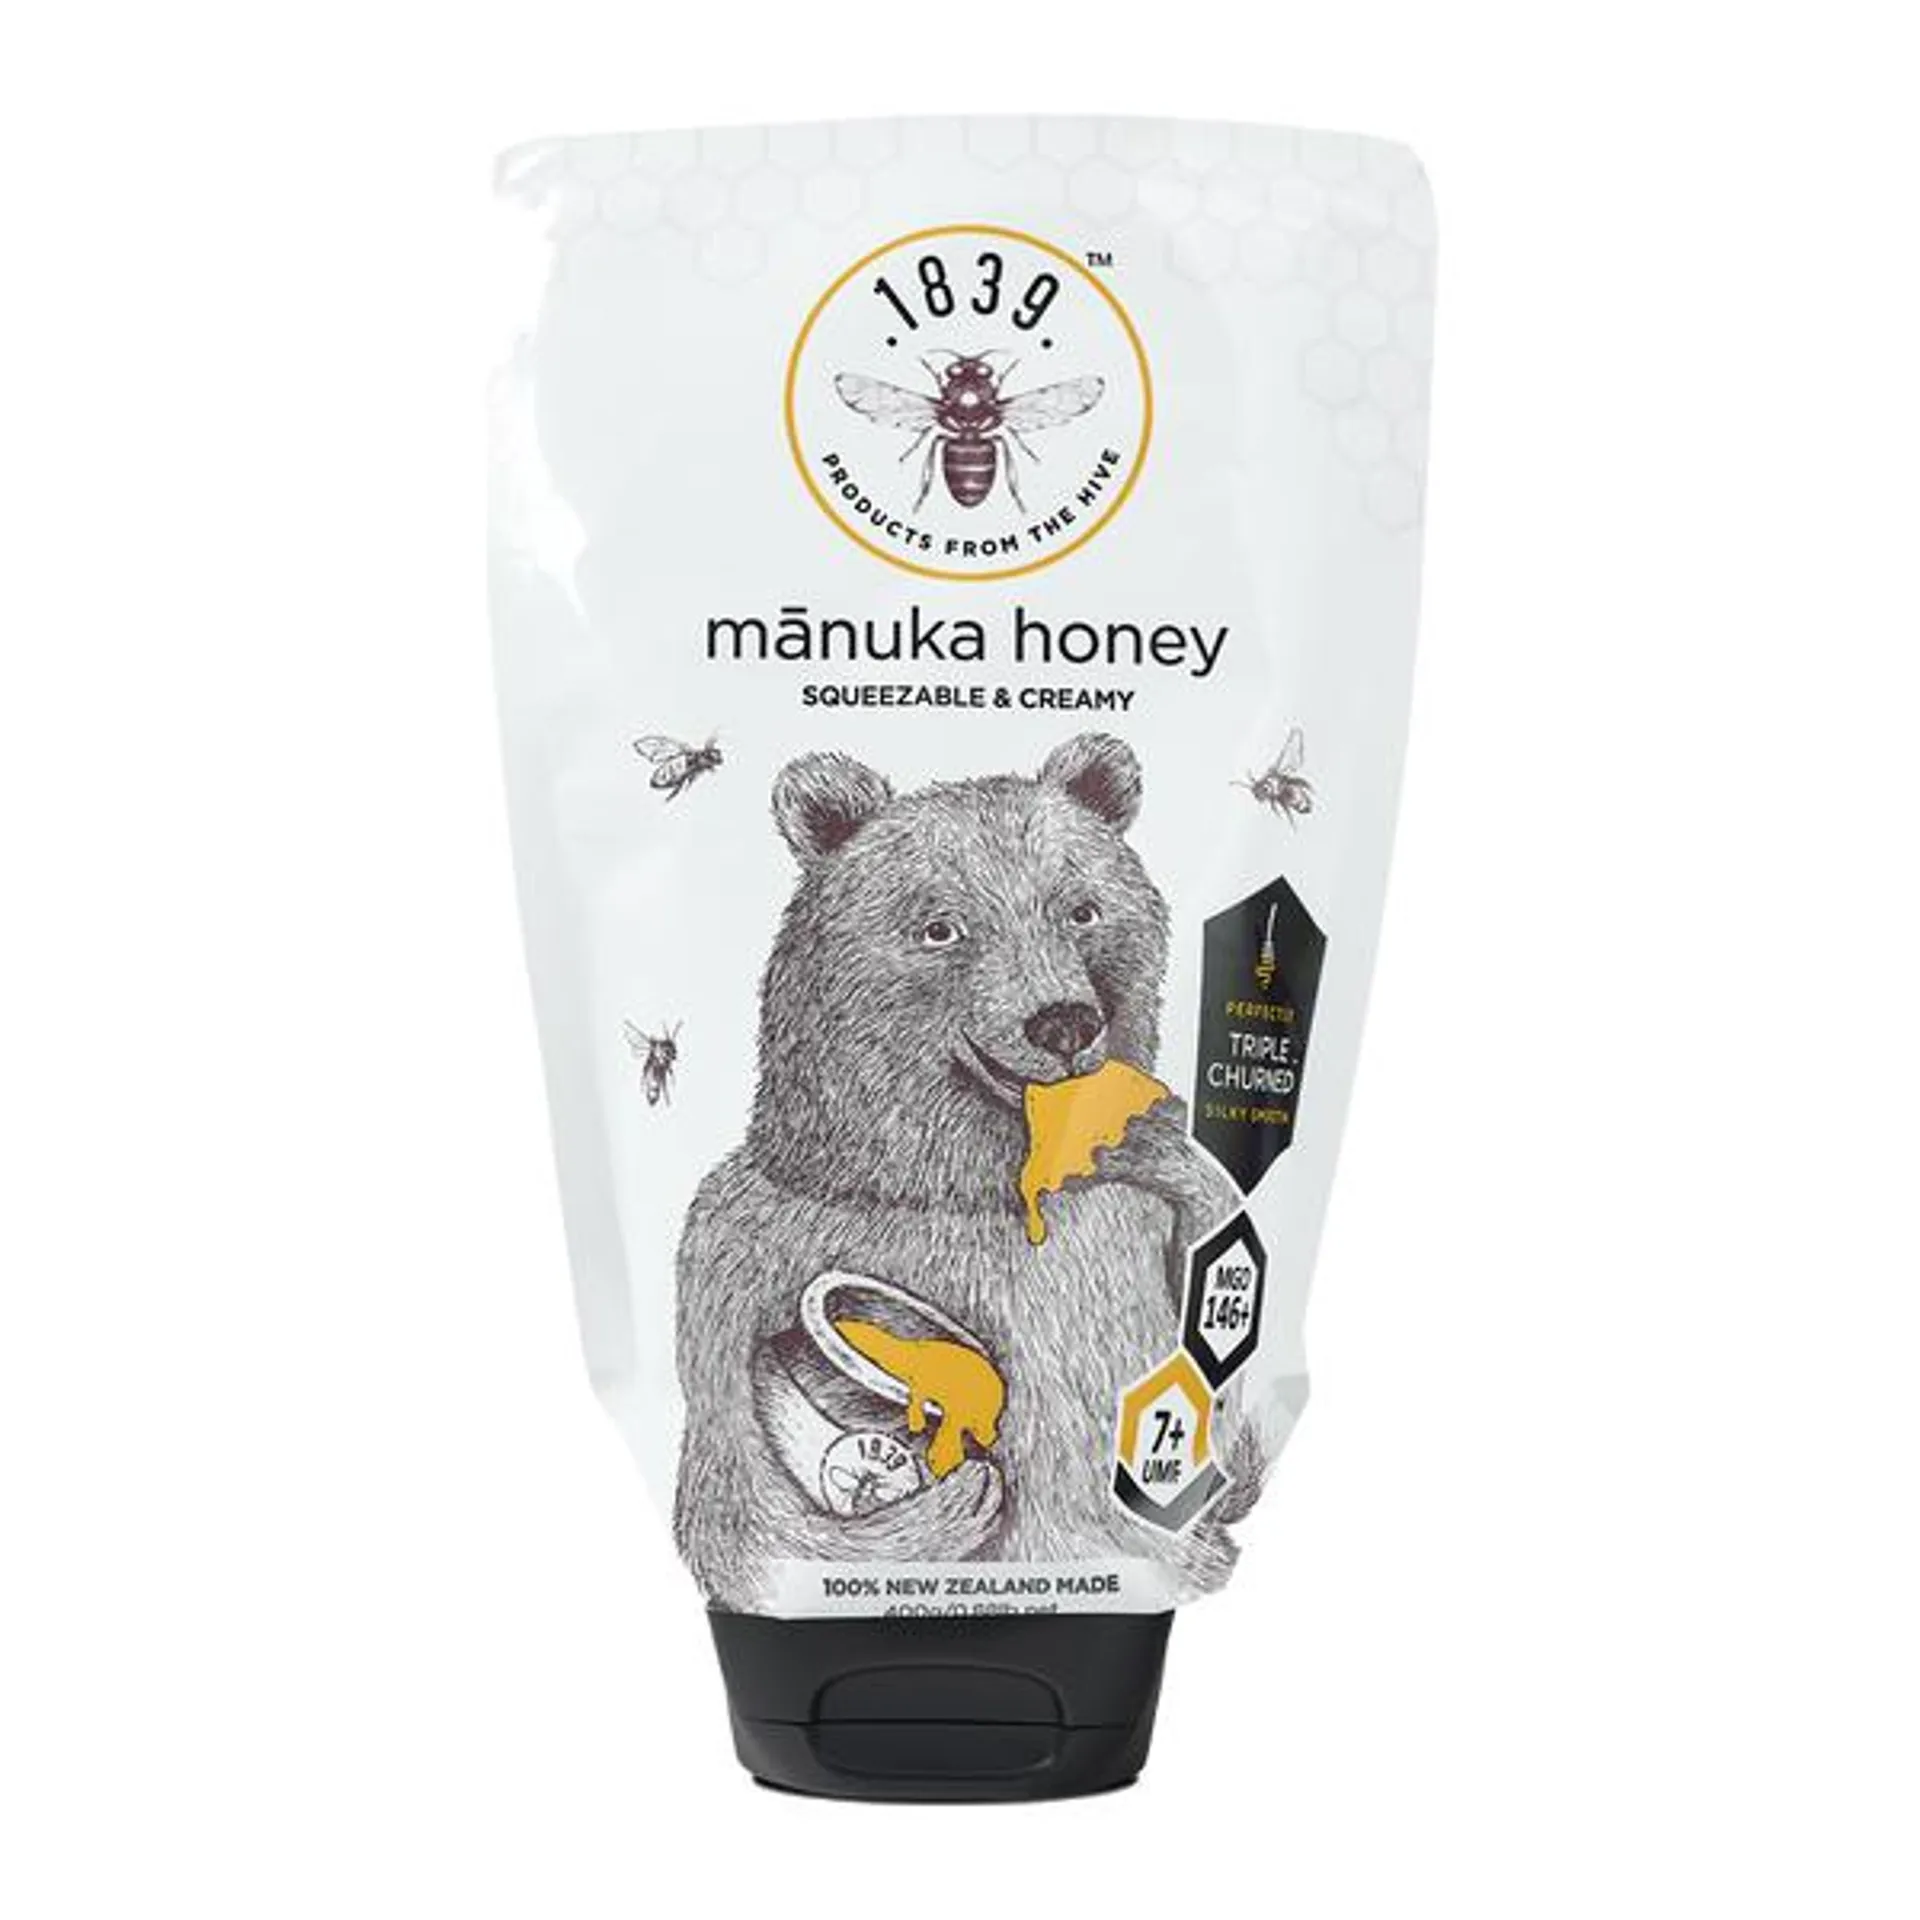 1839 Manuka Honey UMF 7+ 400g